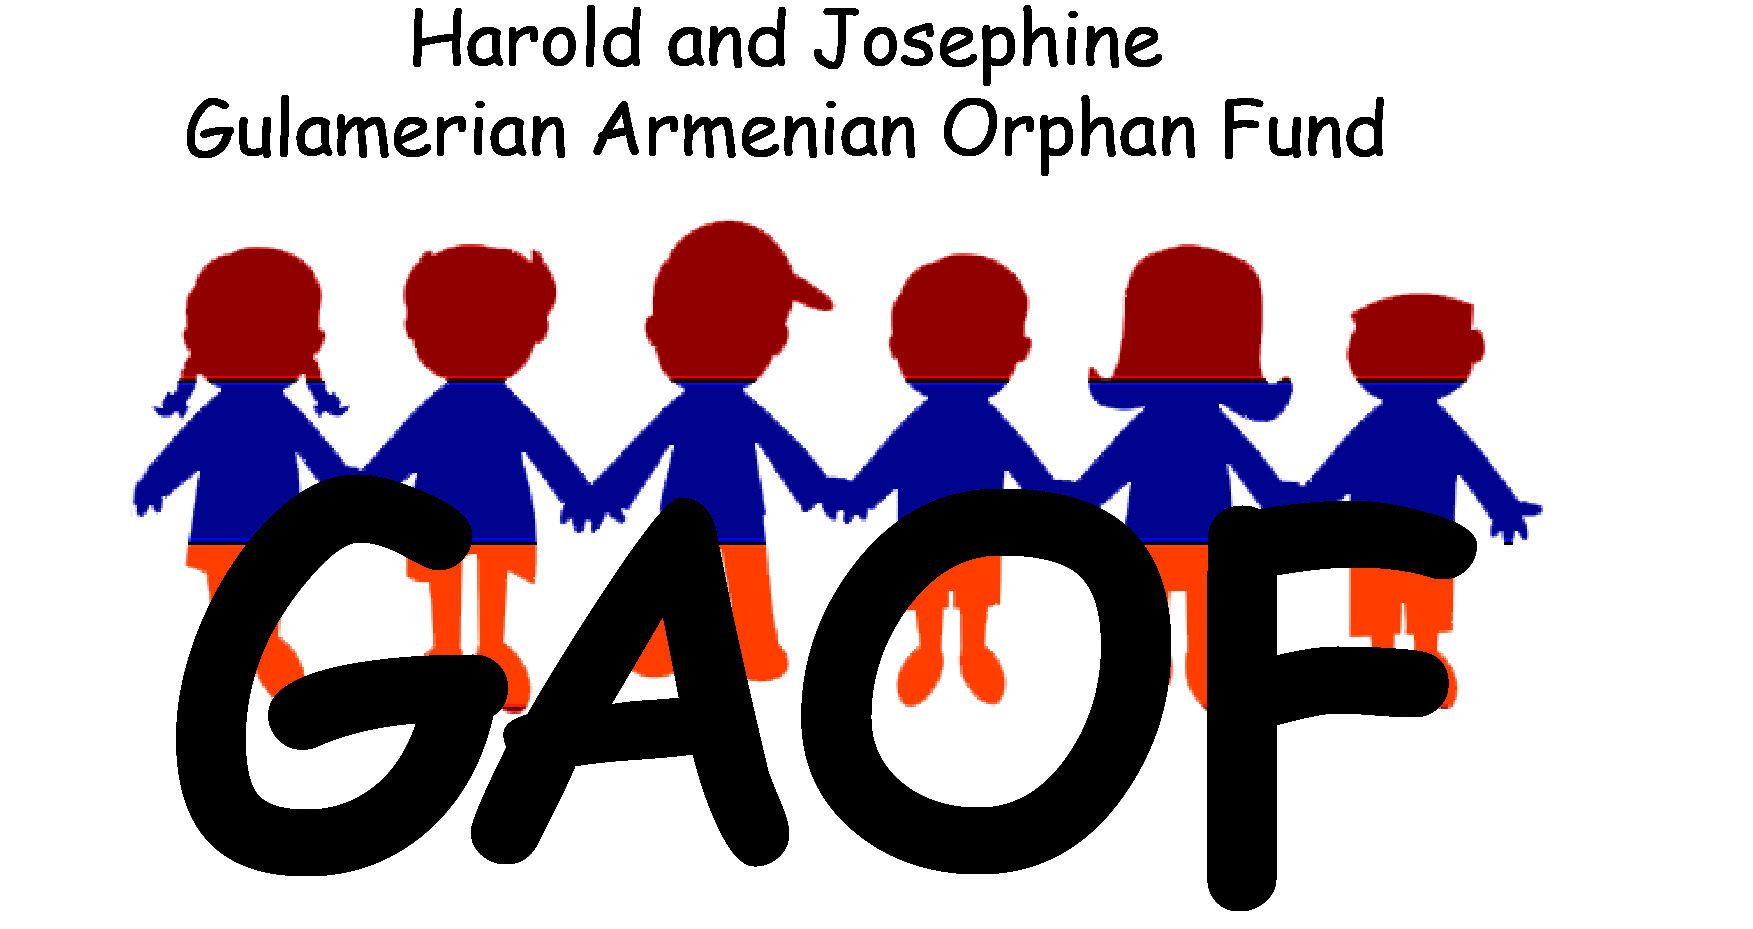 Harold and Josephine Gulamerian Armenian Orphan Fund